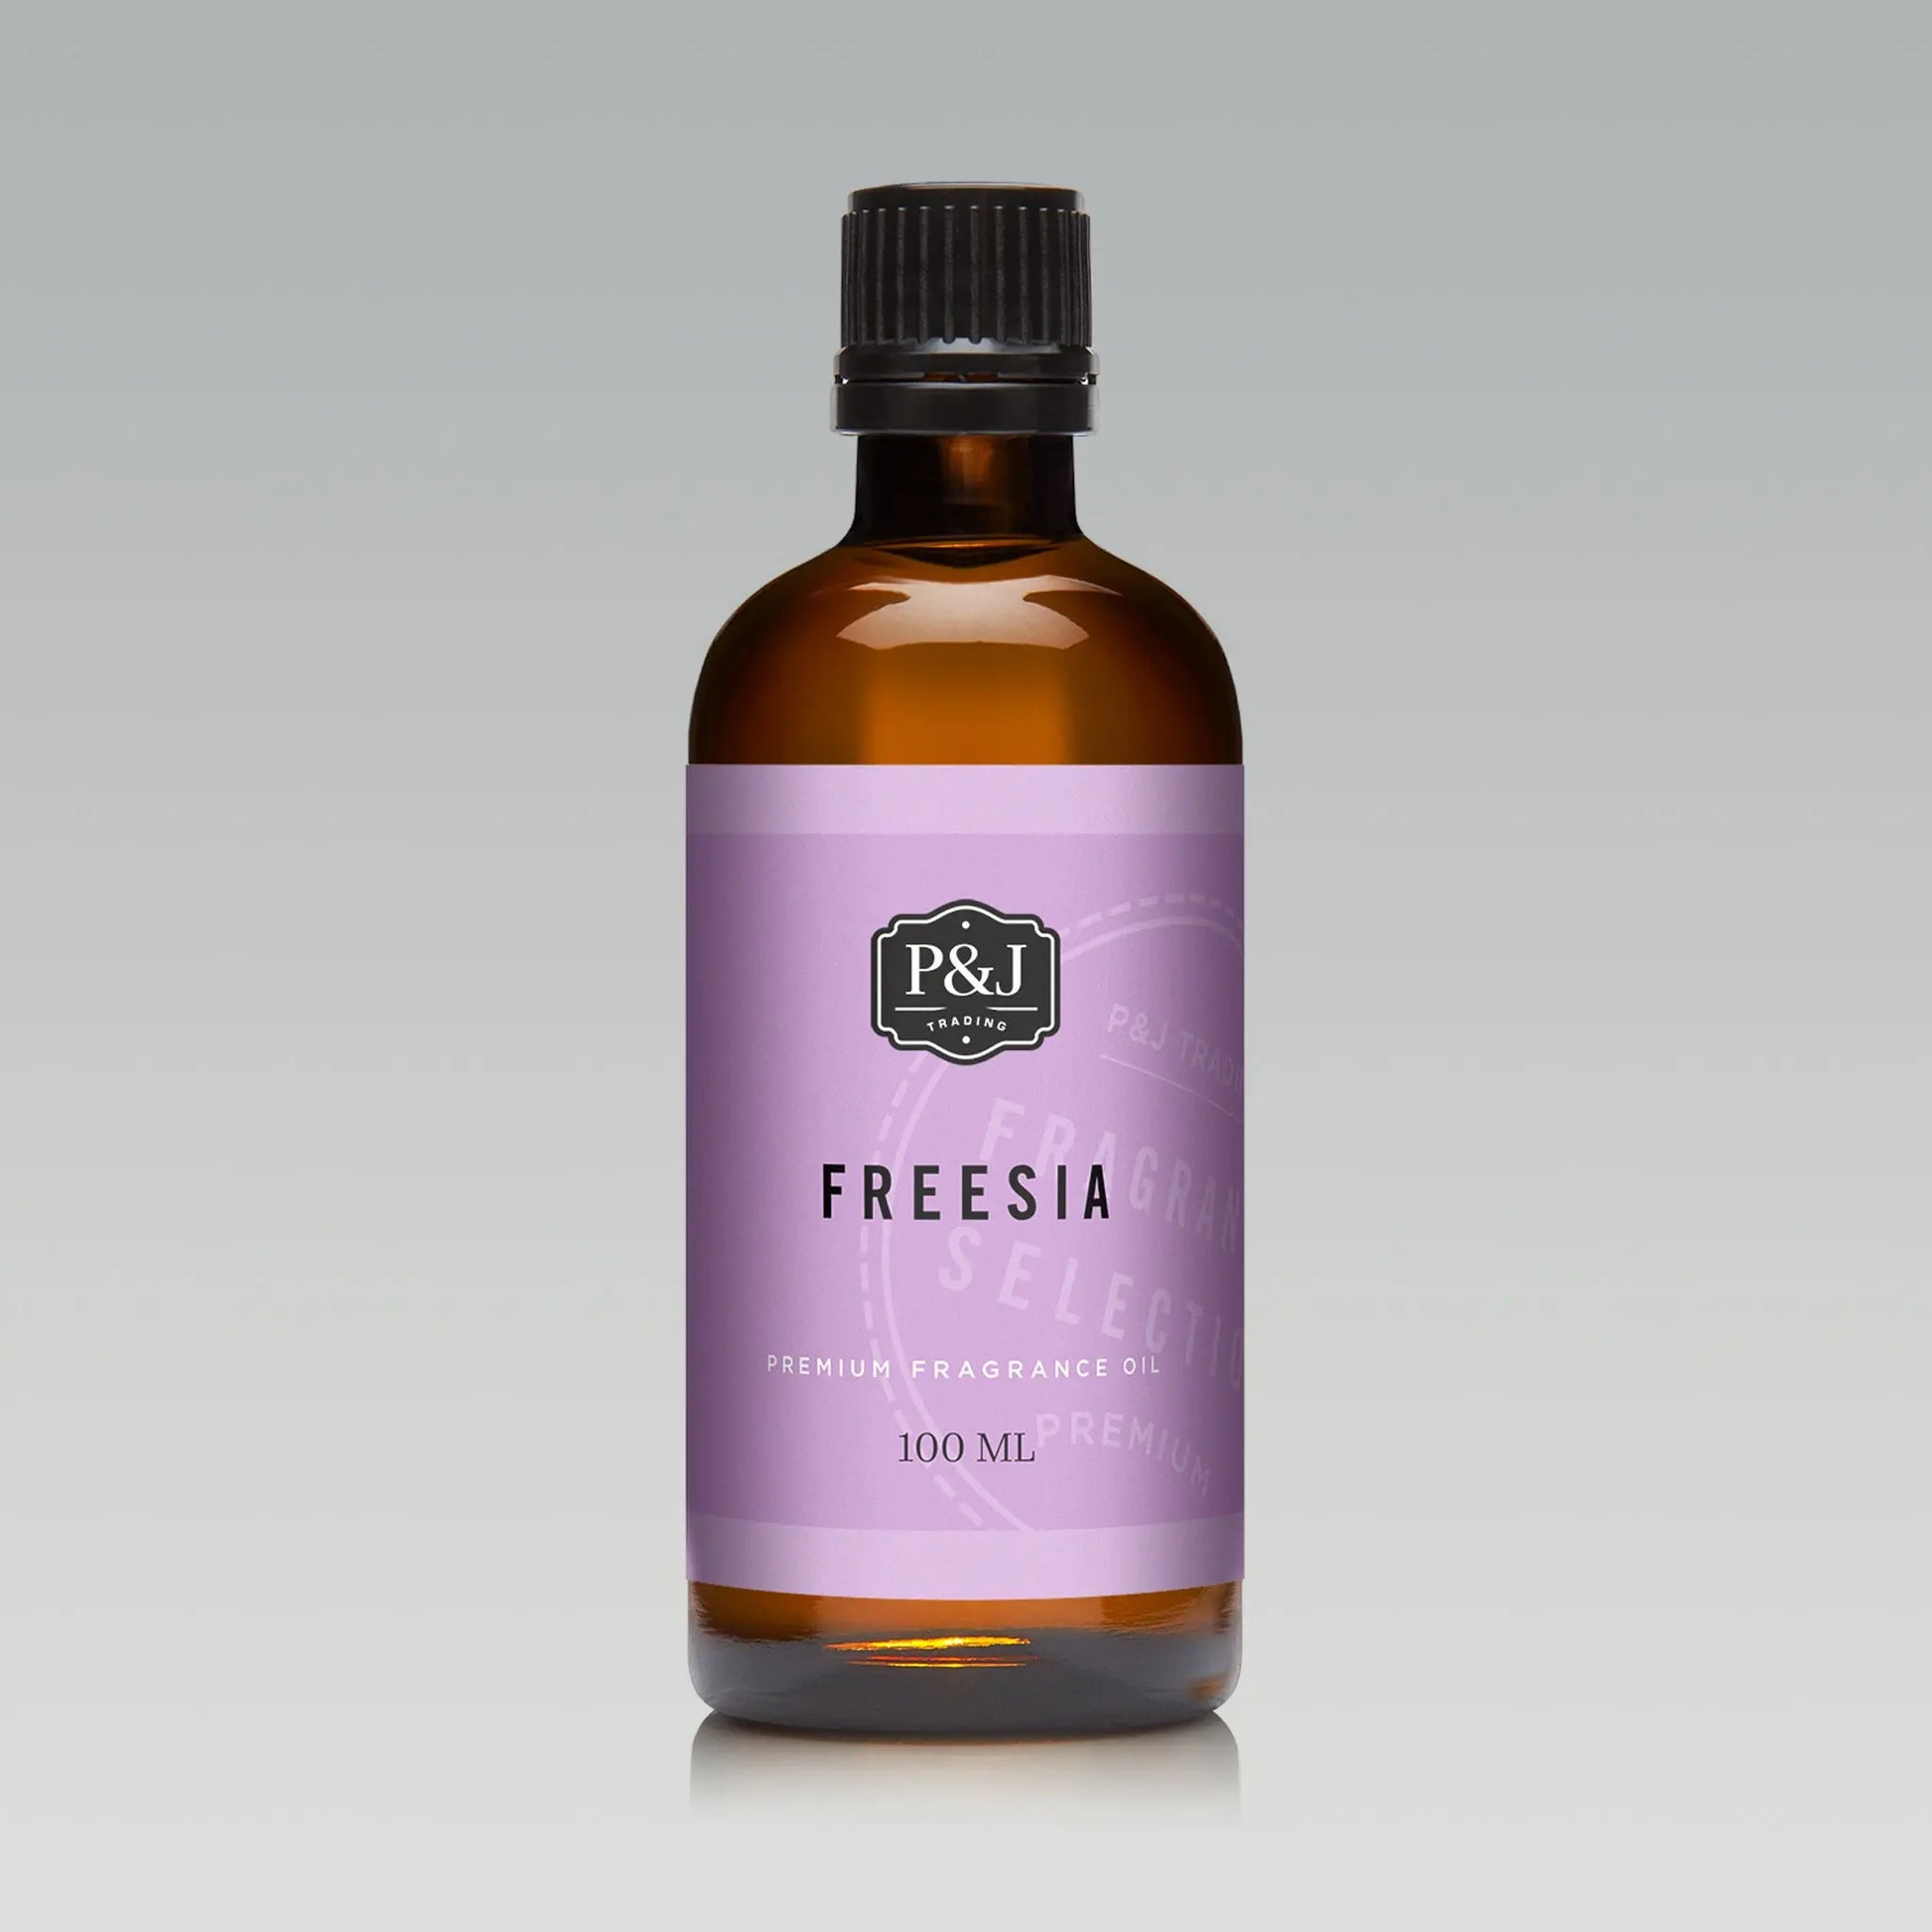 Freesia Fragrance Oil